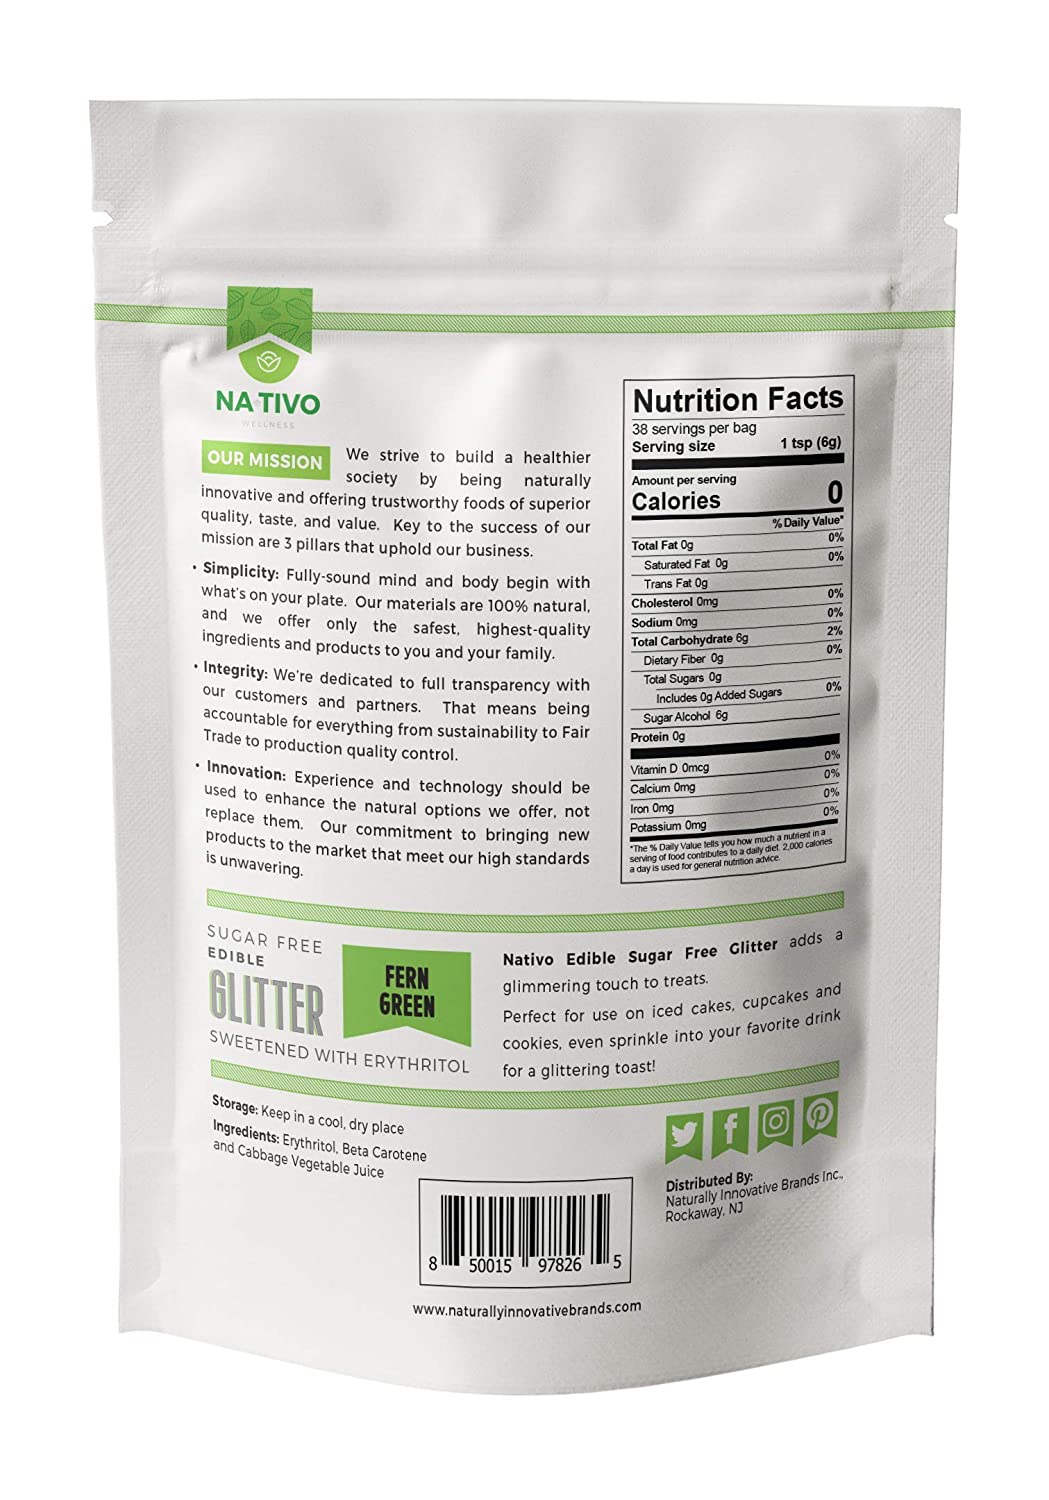 NaTivo Sugar Free Edible Glitter Fern Green 12 units per case 8.0 oz